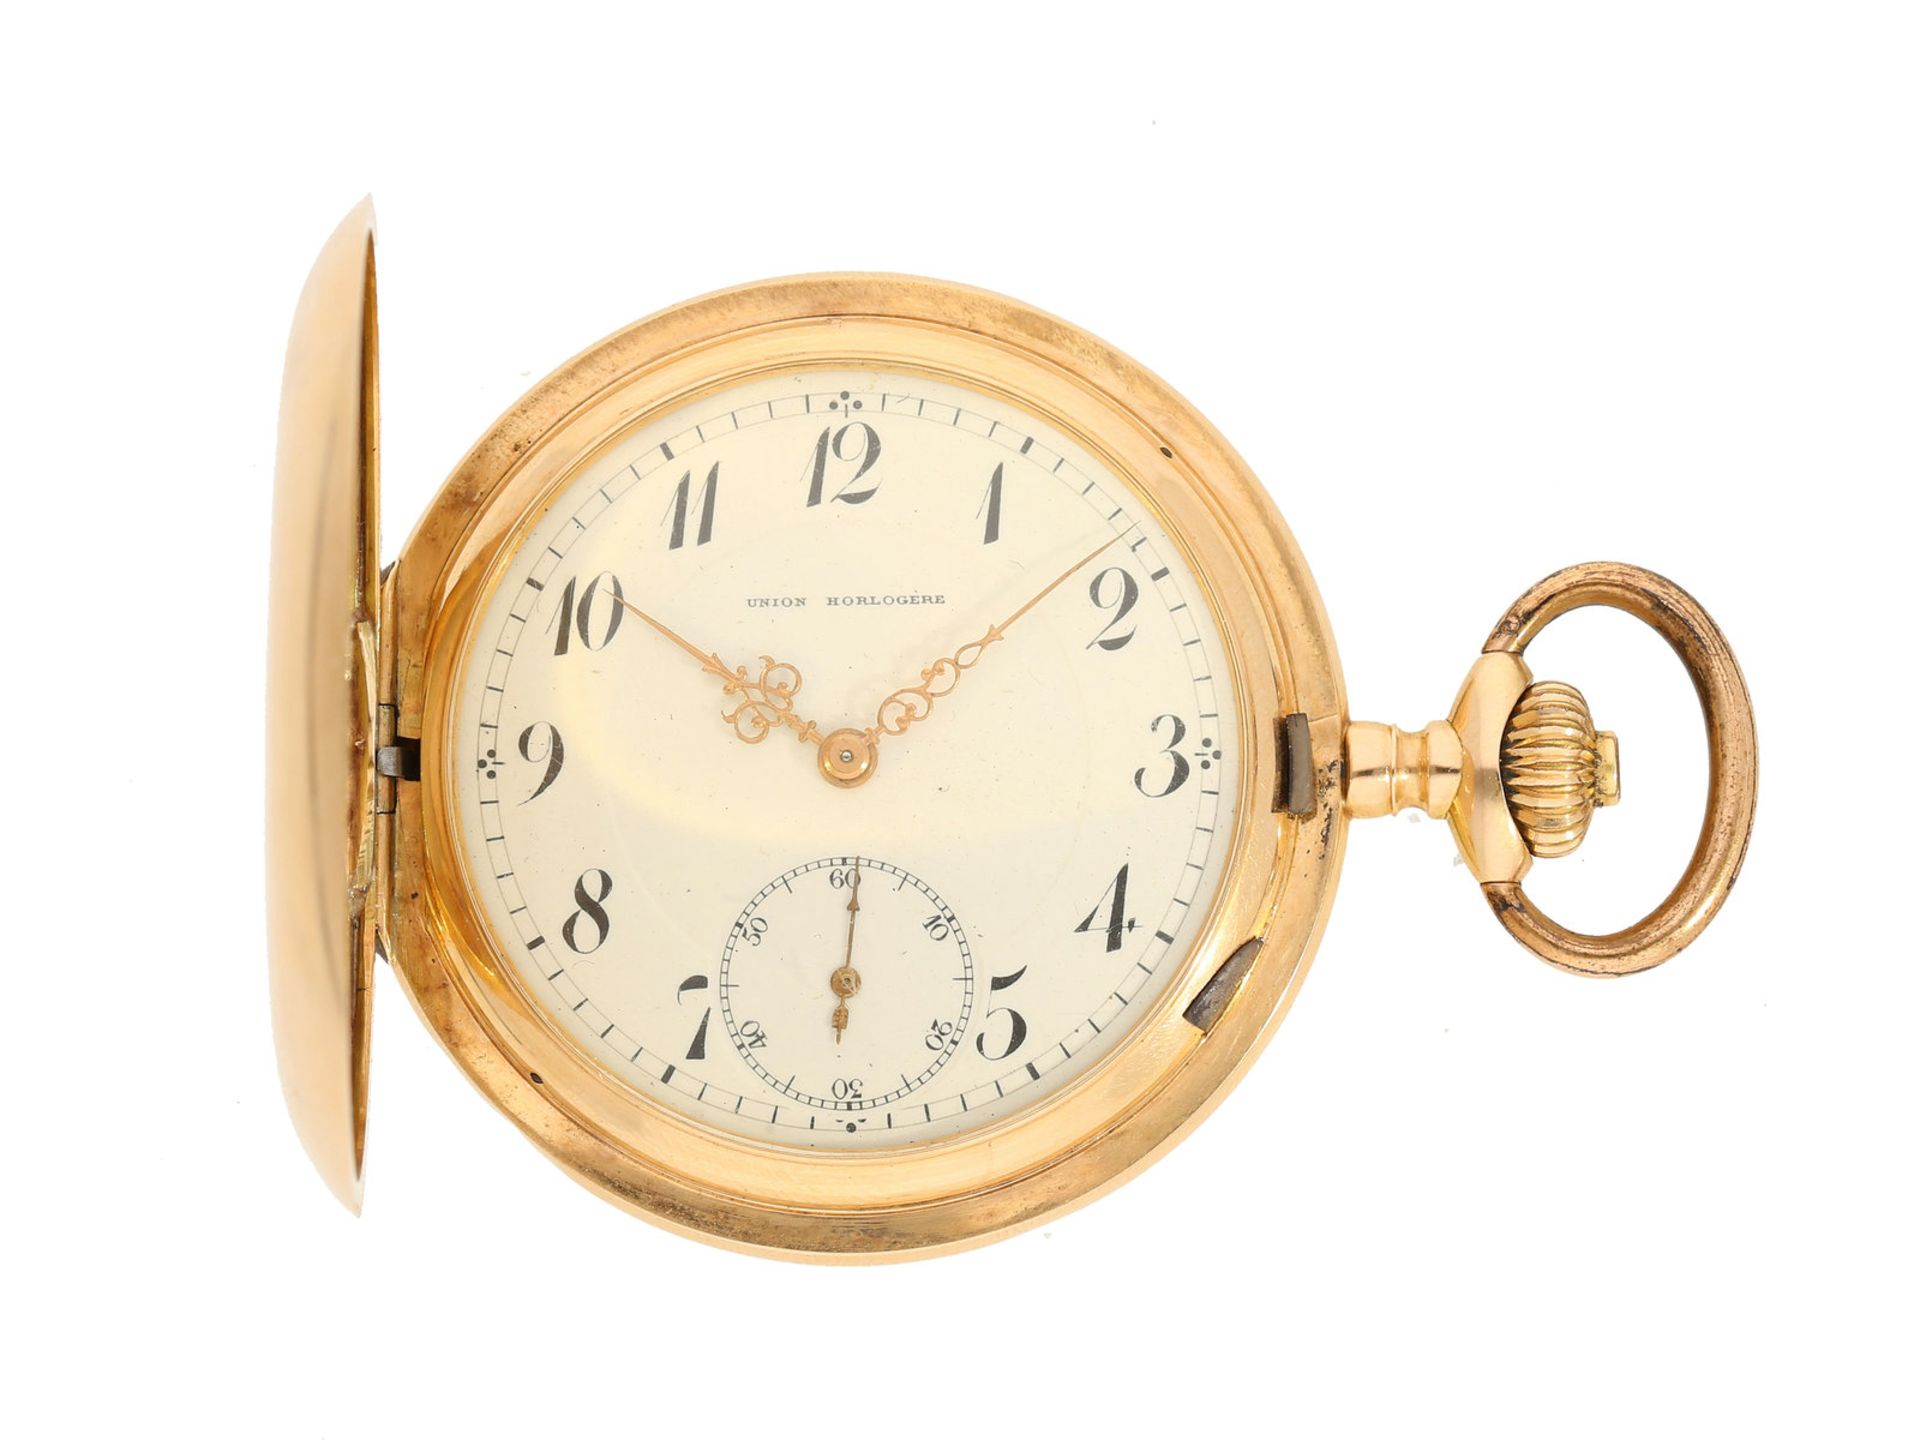 Taschenuhr: Goldsavonnette Union Horlogère, 14K Gold, um 1900 Ca. Ø50mm, ca. 81g, 14K Rotgold,